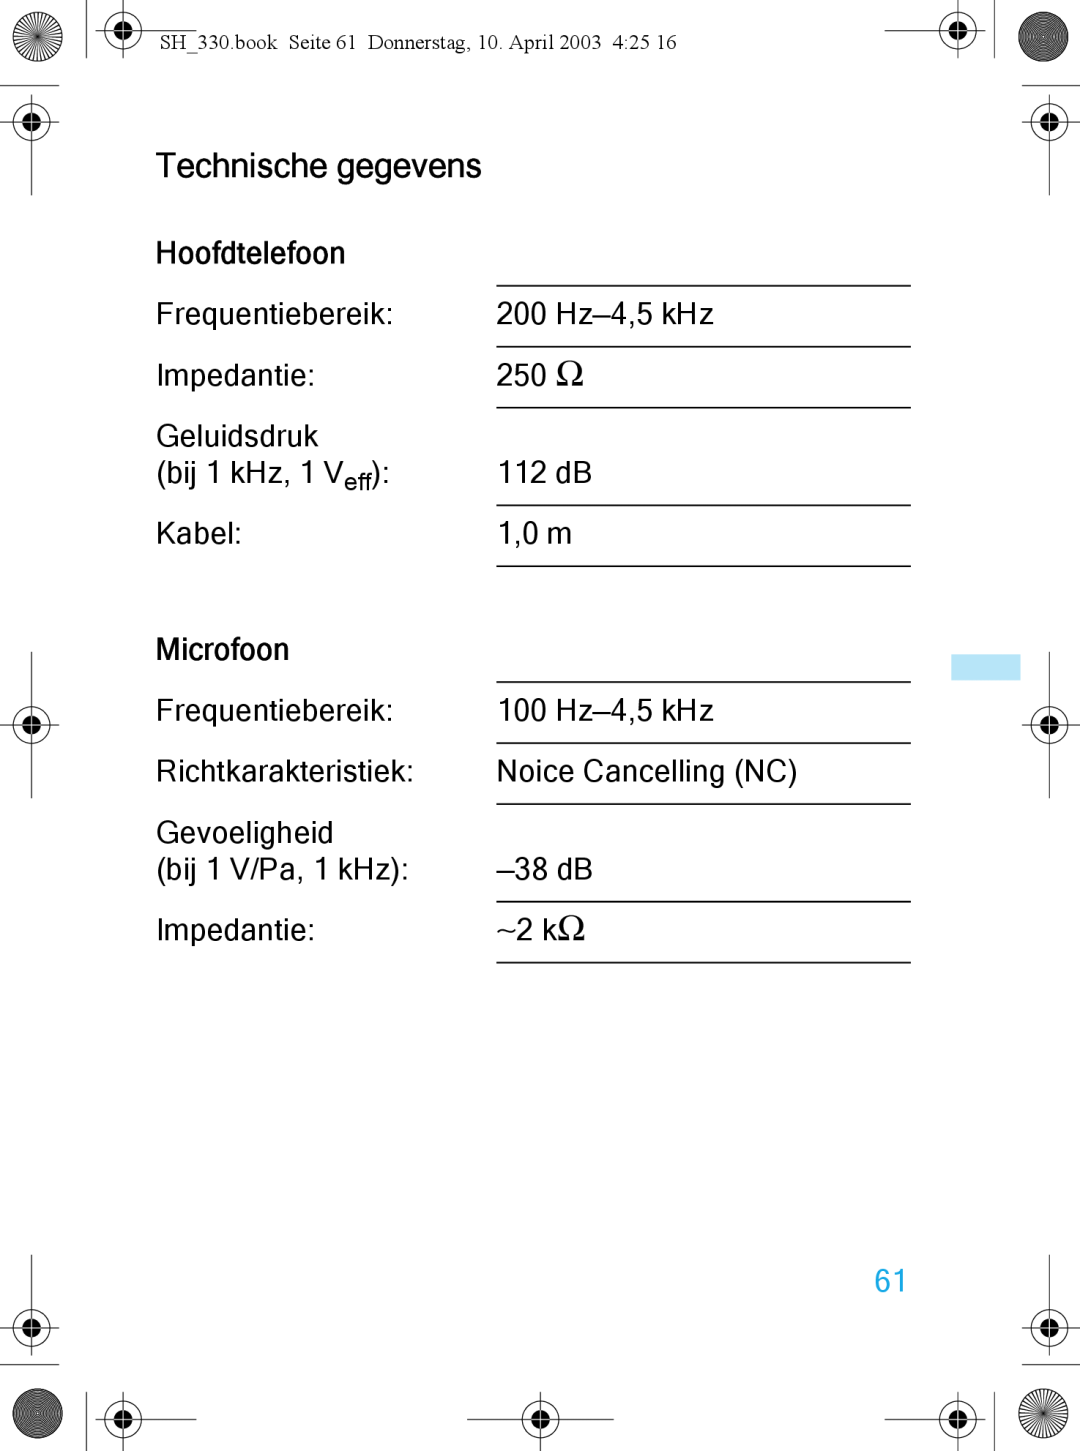 Sennheiser SH 330 manual Technische gegevens, Hoofdtelefoon, Microfoon 